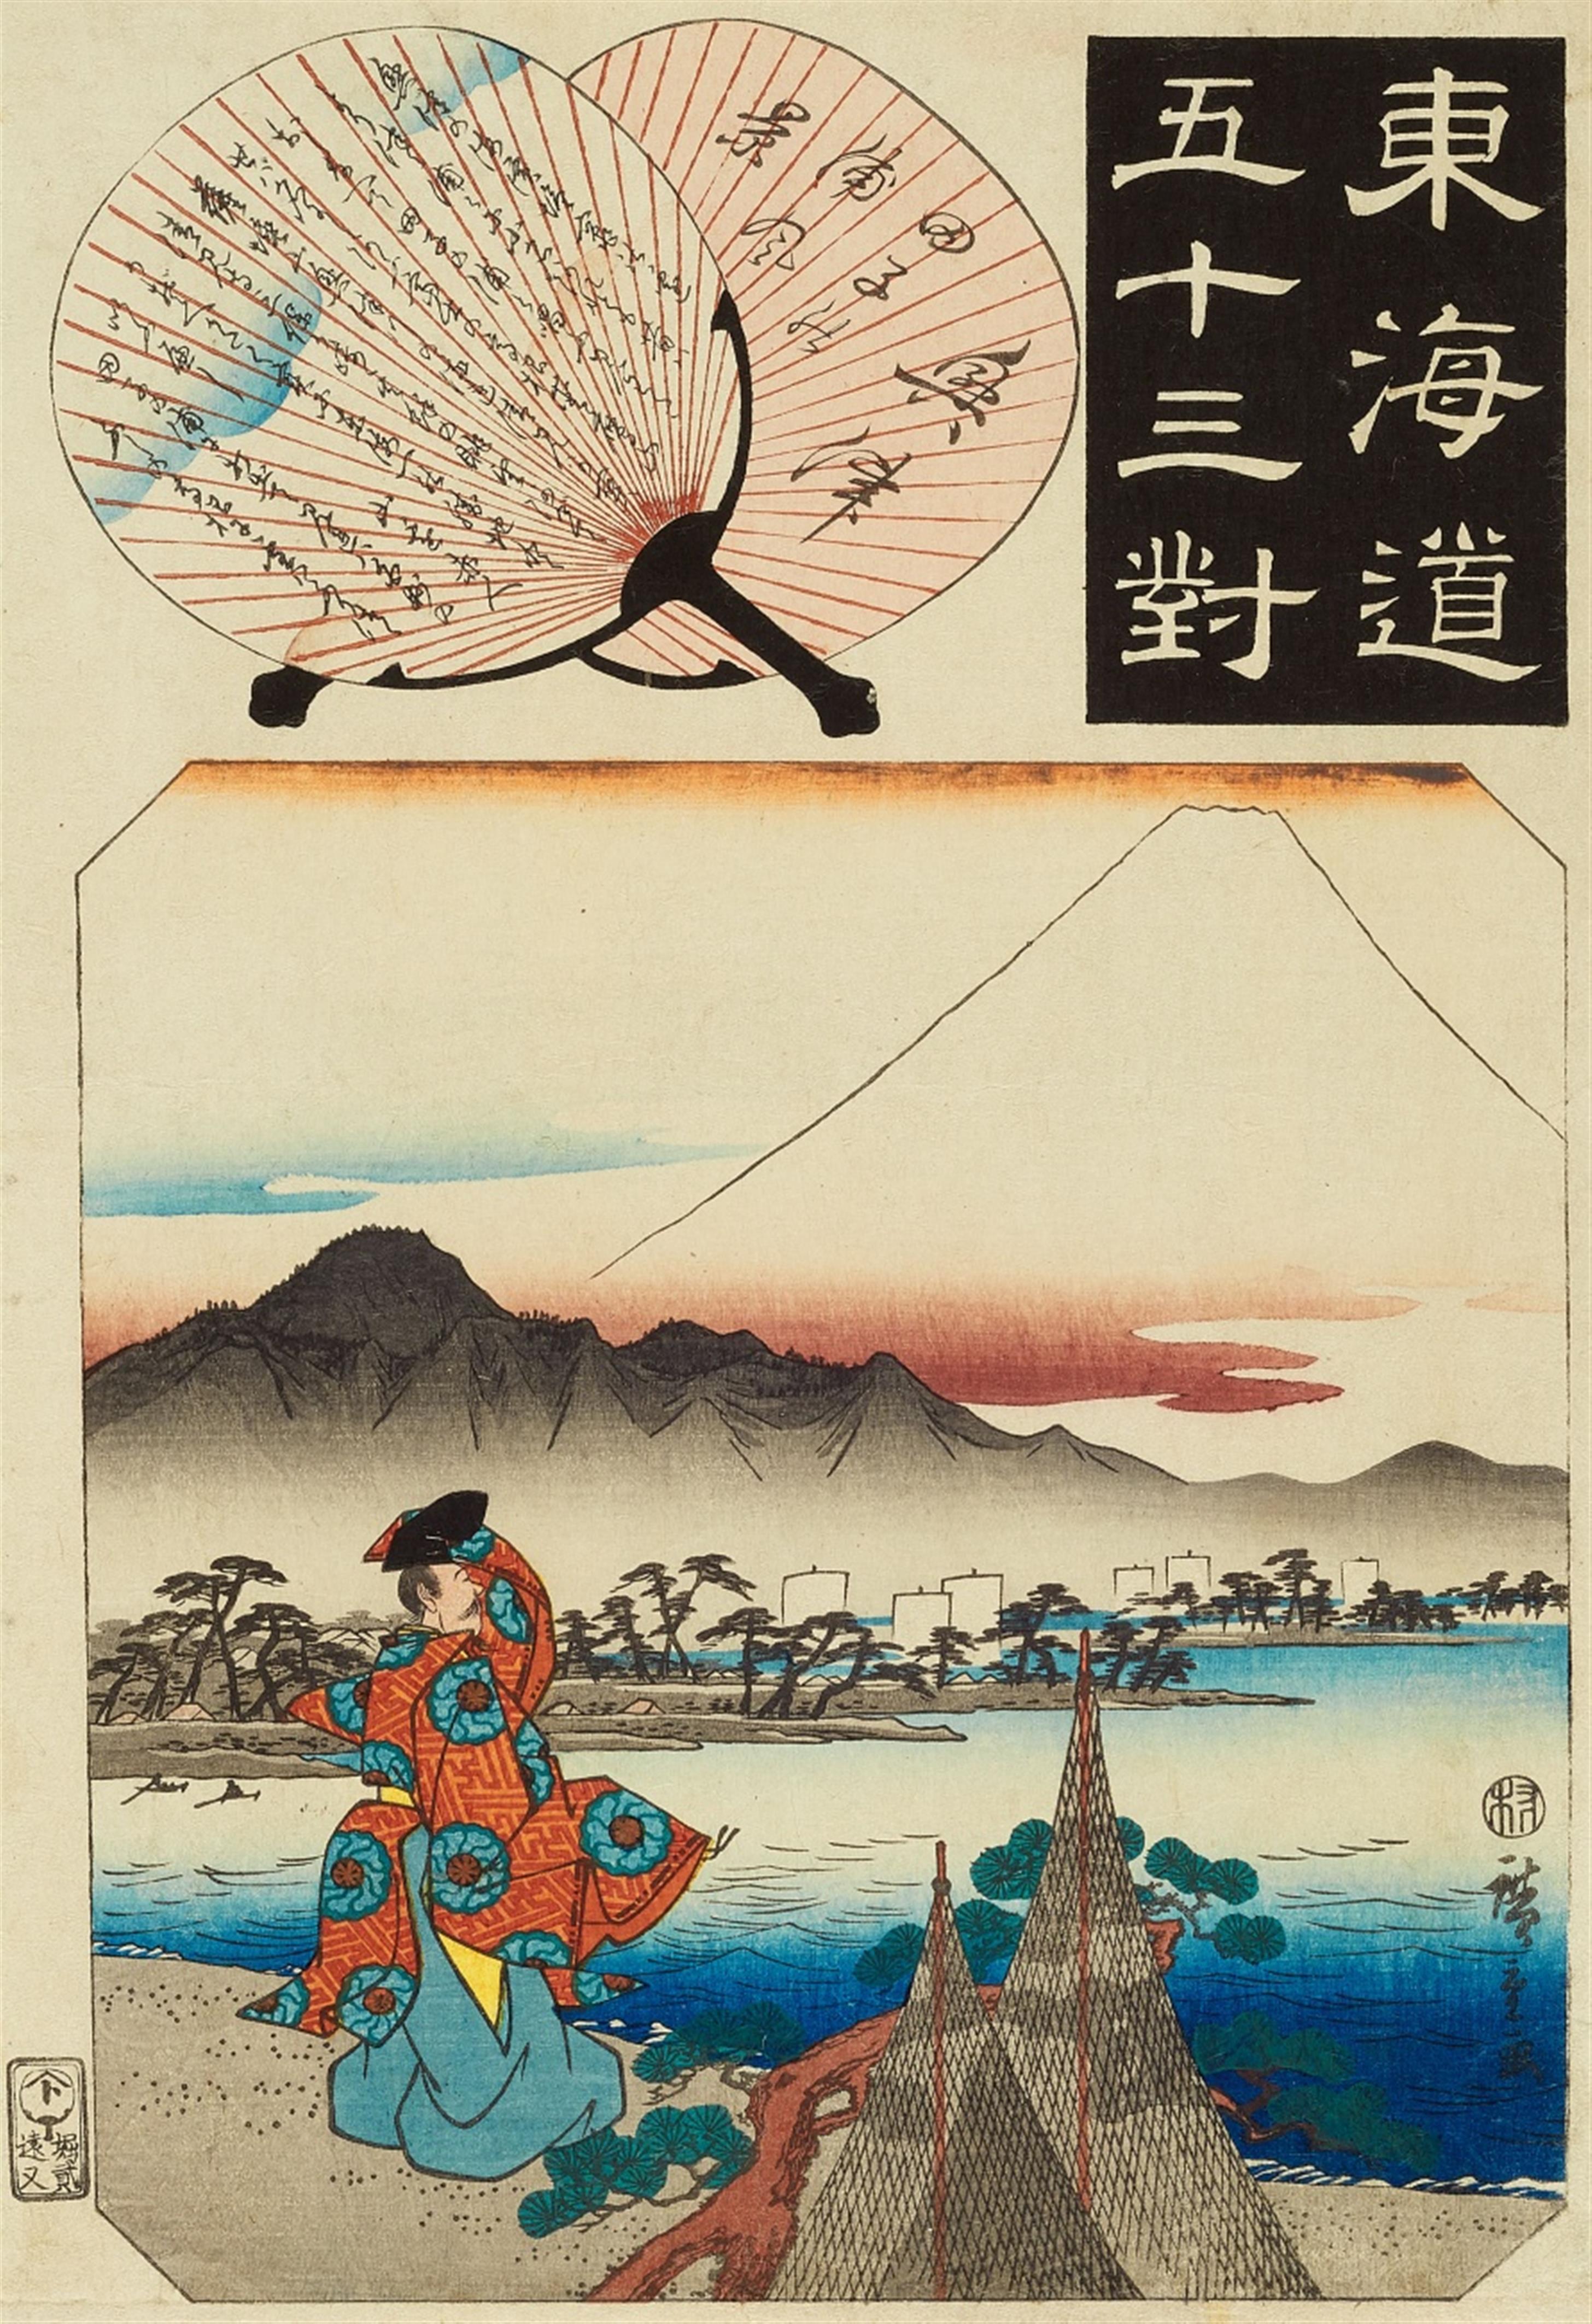 Utagawa Kuniyoshi (1798-1861), Utagawa Hiroshige (1797-1858) and Utagawa Kunisada (1786-1864) - image-1